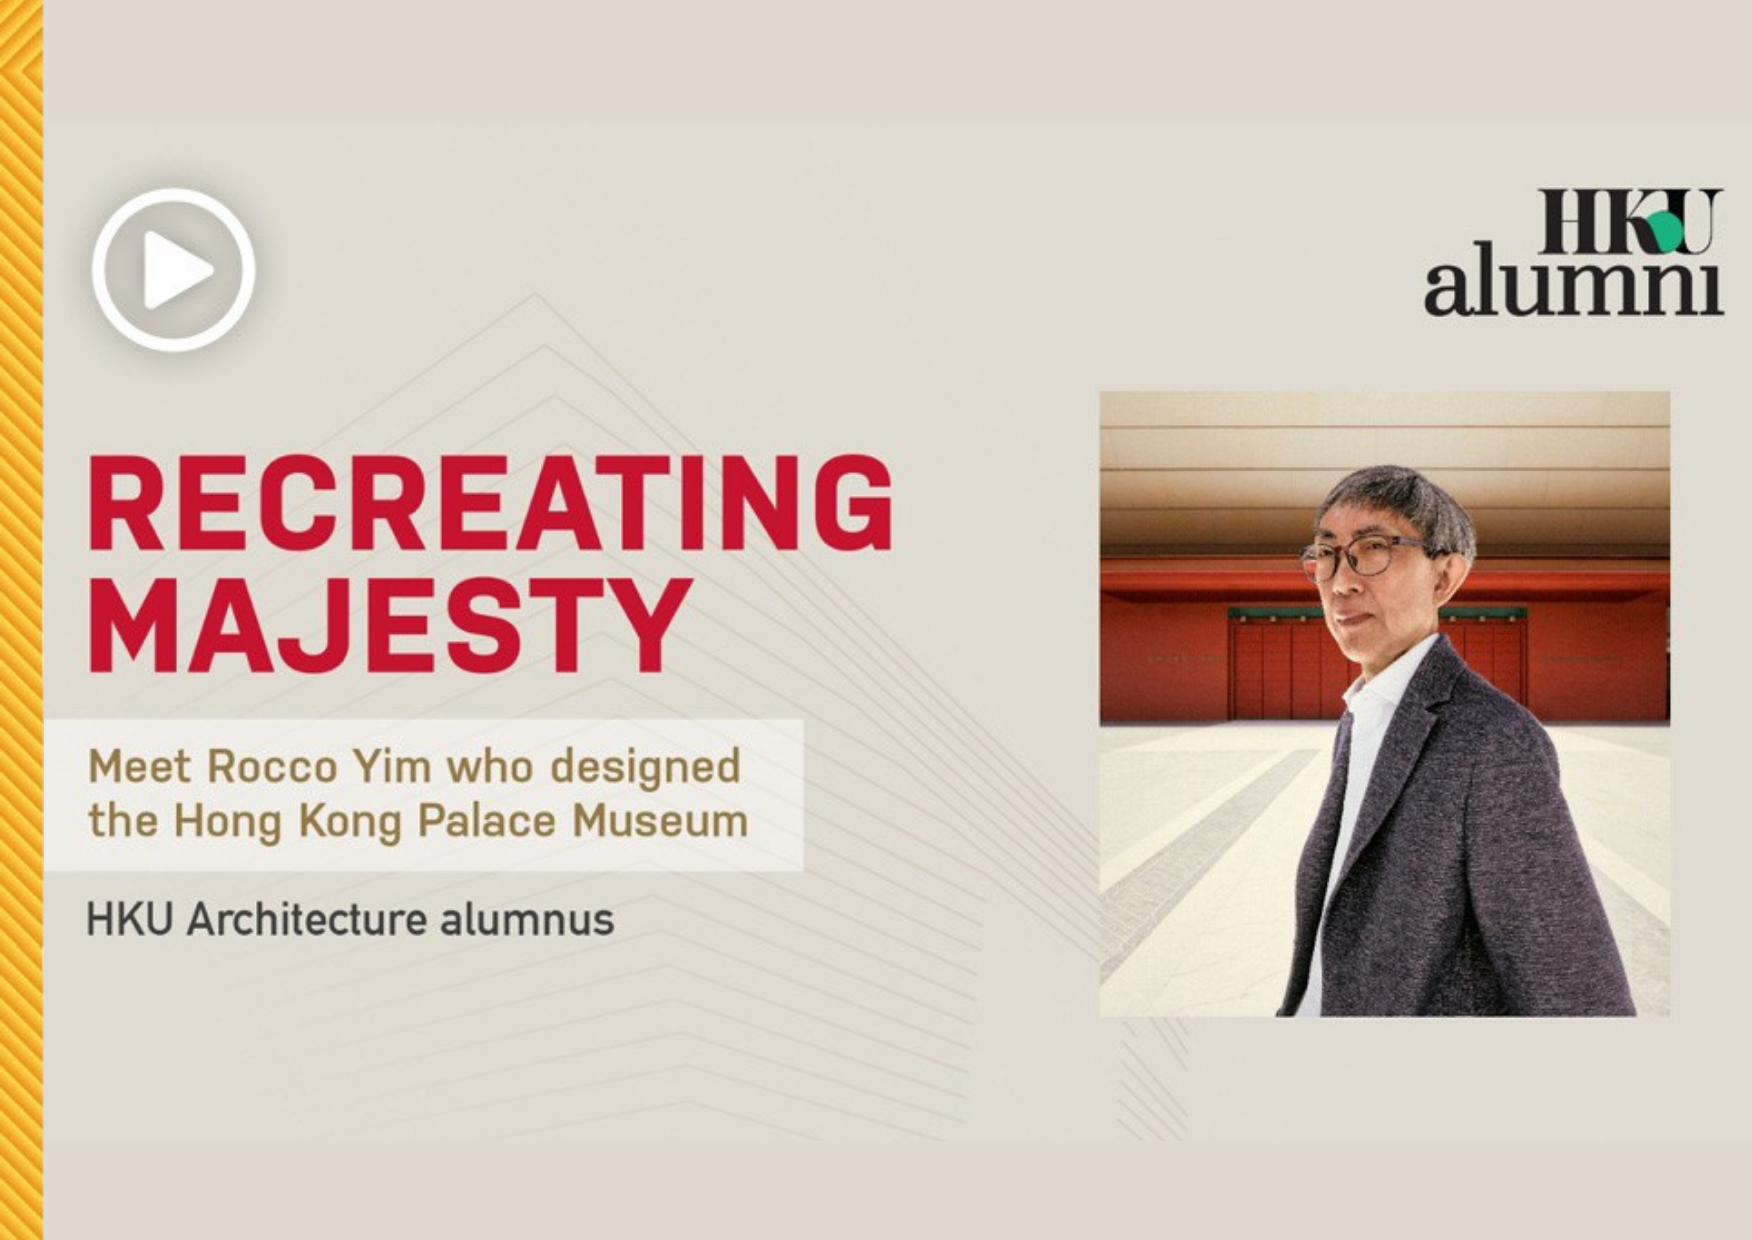 Meet Rocco Yim, who designed the Hong Kong Palace Museum